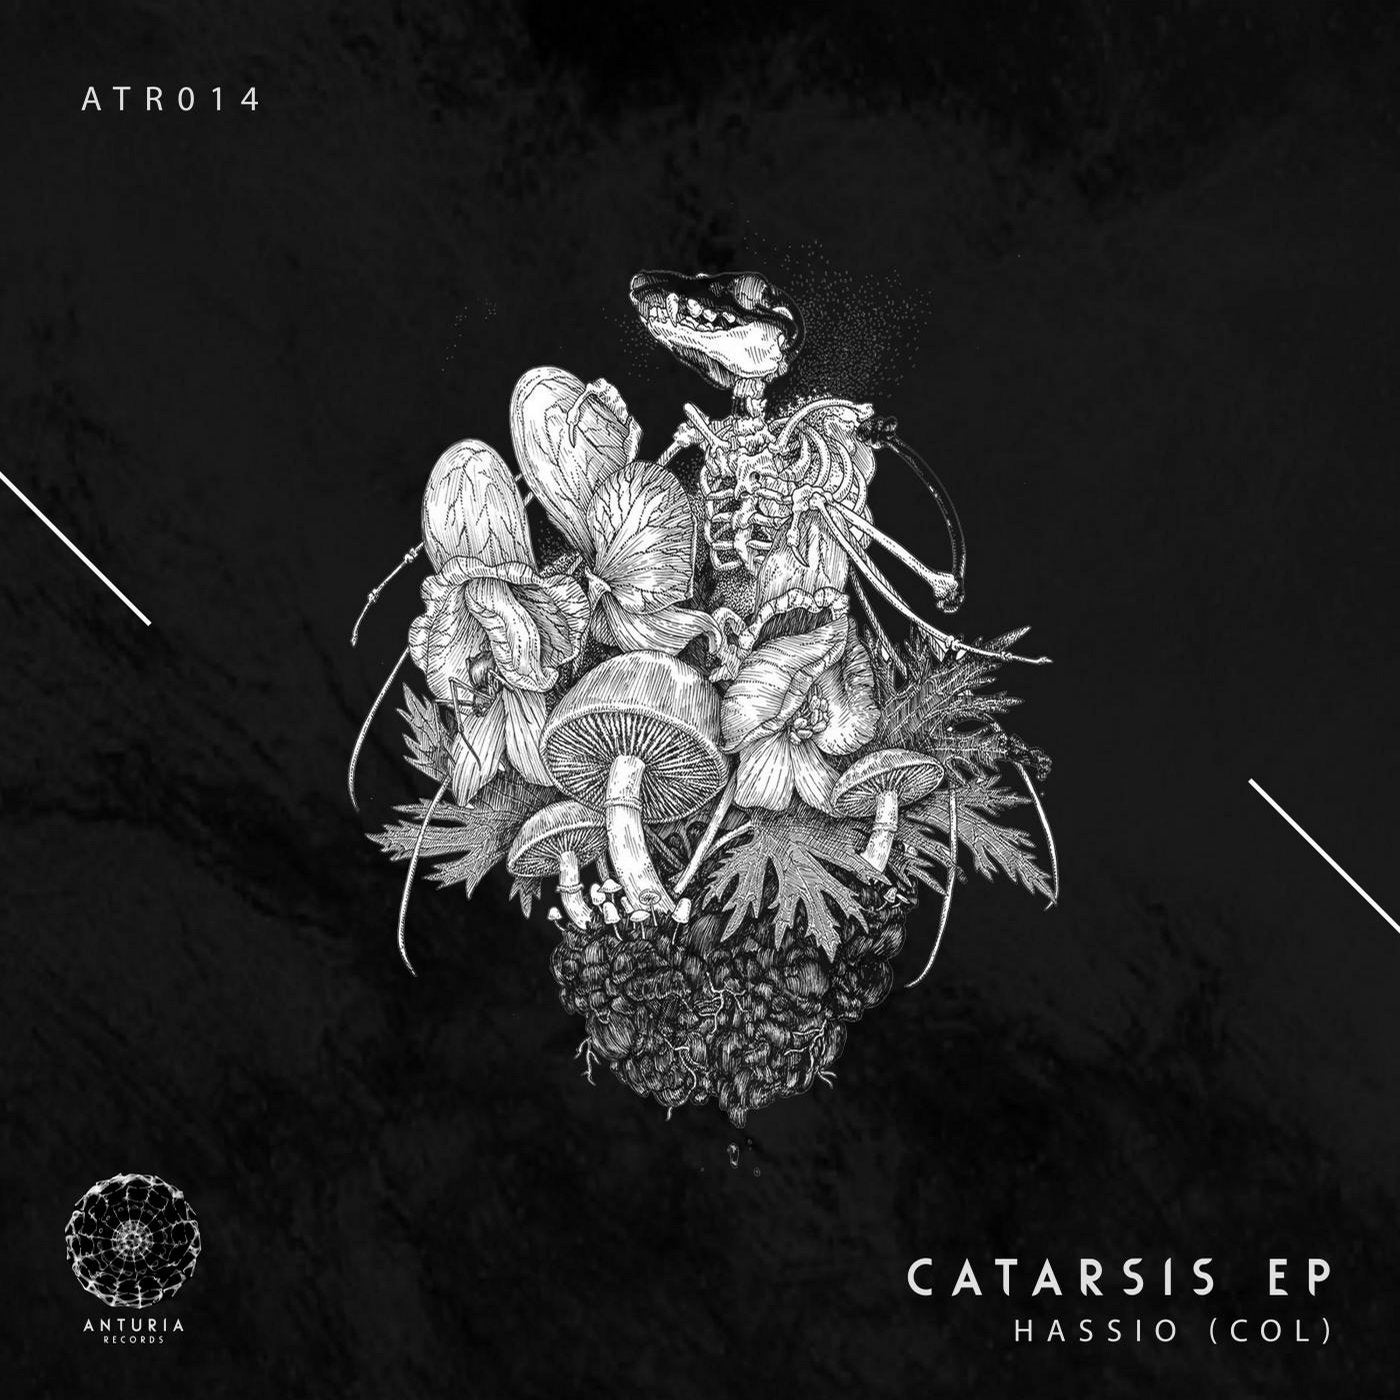 Catarsis EP